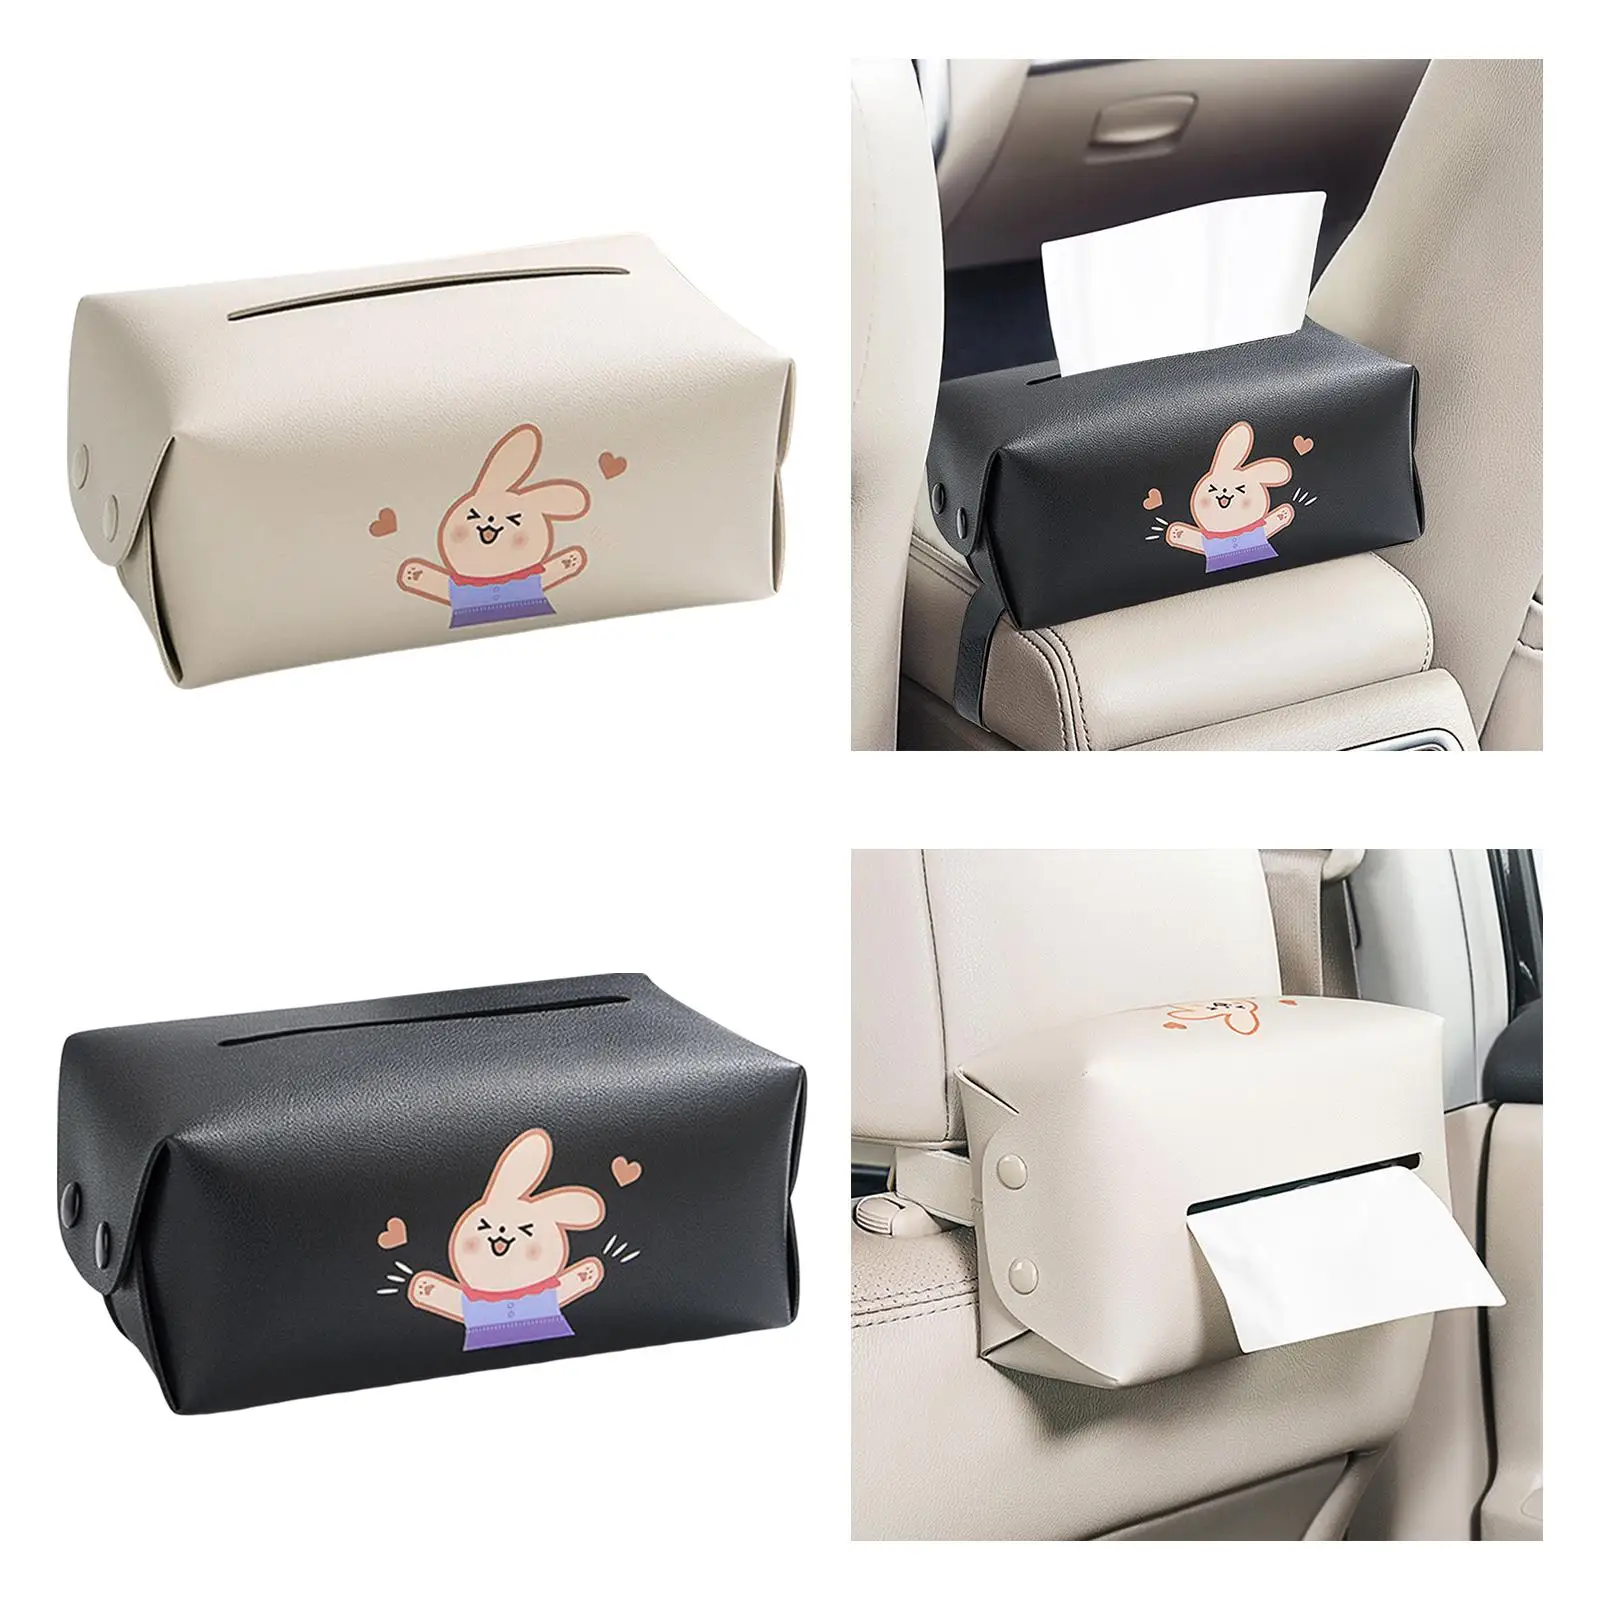 Auto Napkin Dispenser Storage Cases PU Leather Adjustable for Car Armrest Box